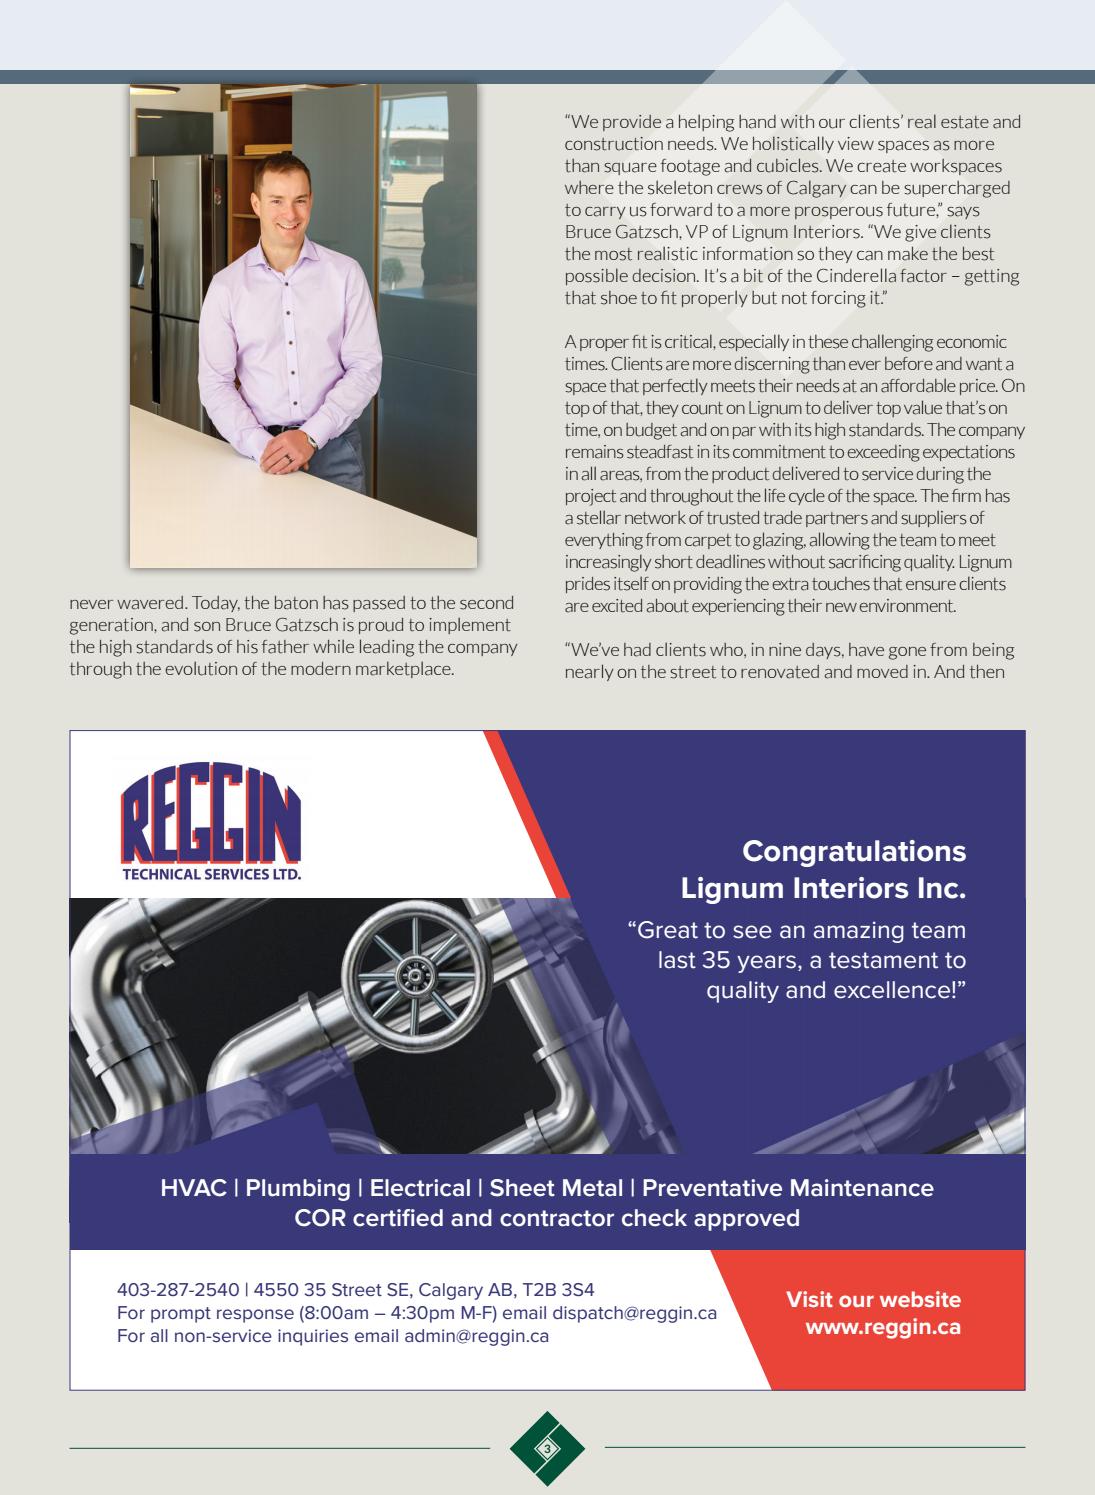 Business in Calgary Magazine - Business Profile for Lignum Interiors